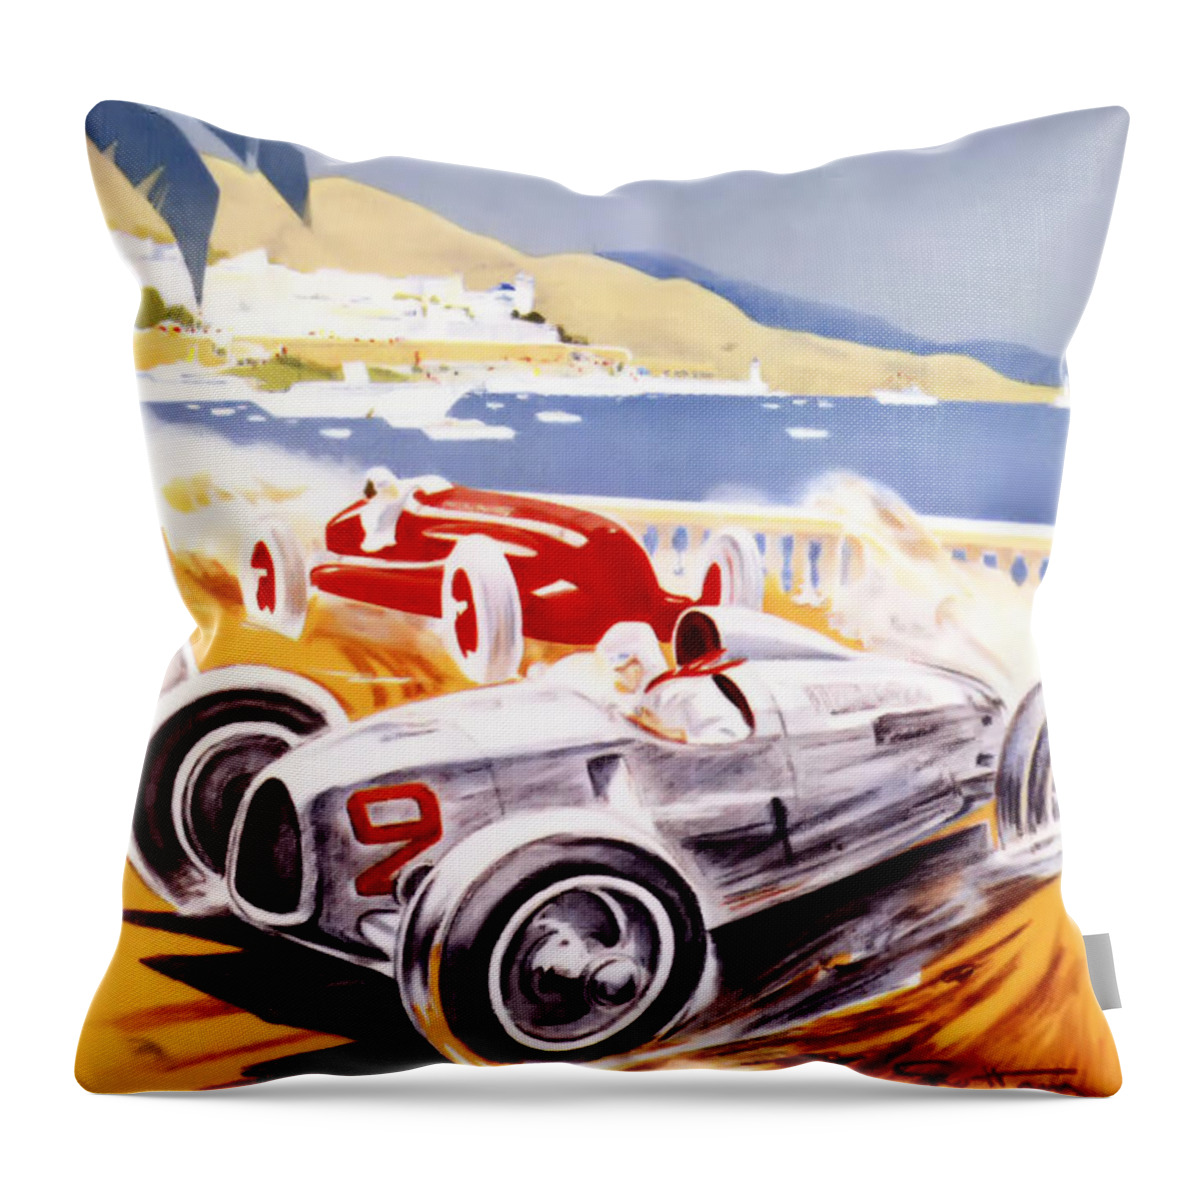 F1 Throw Pillow featuring the digital art 1936 F1 Monaco Grand Prix by Grand Prix